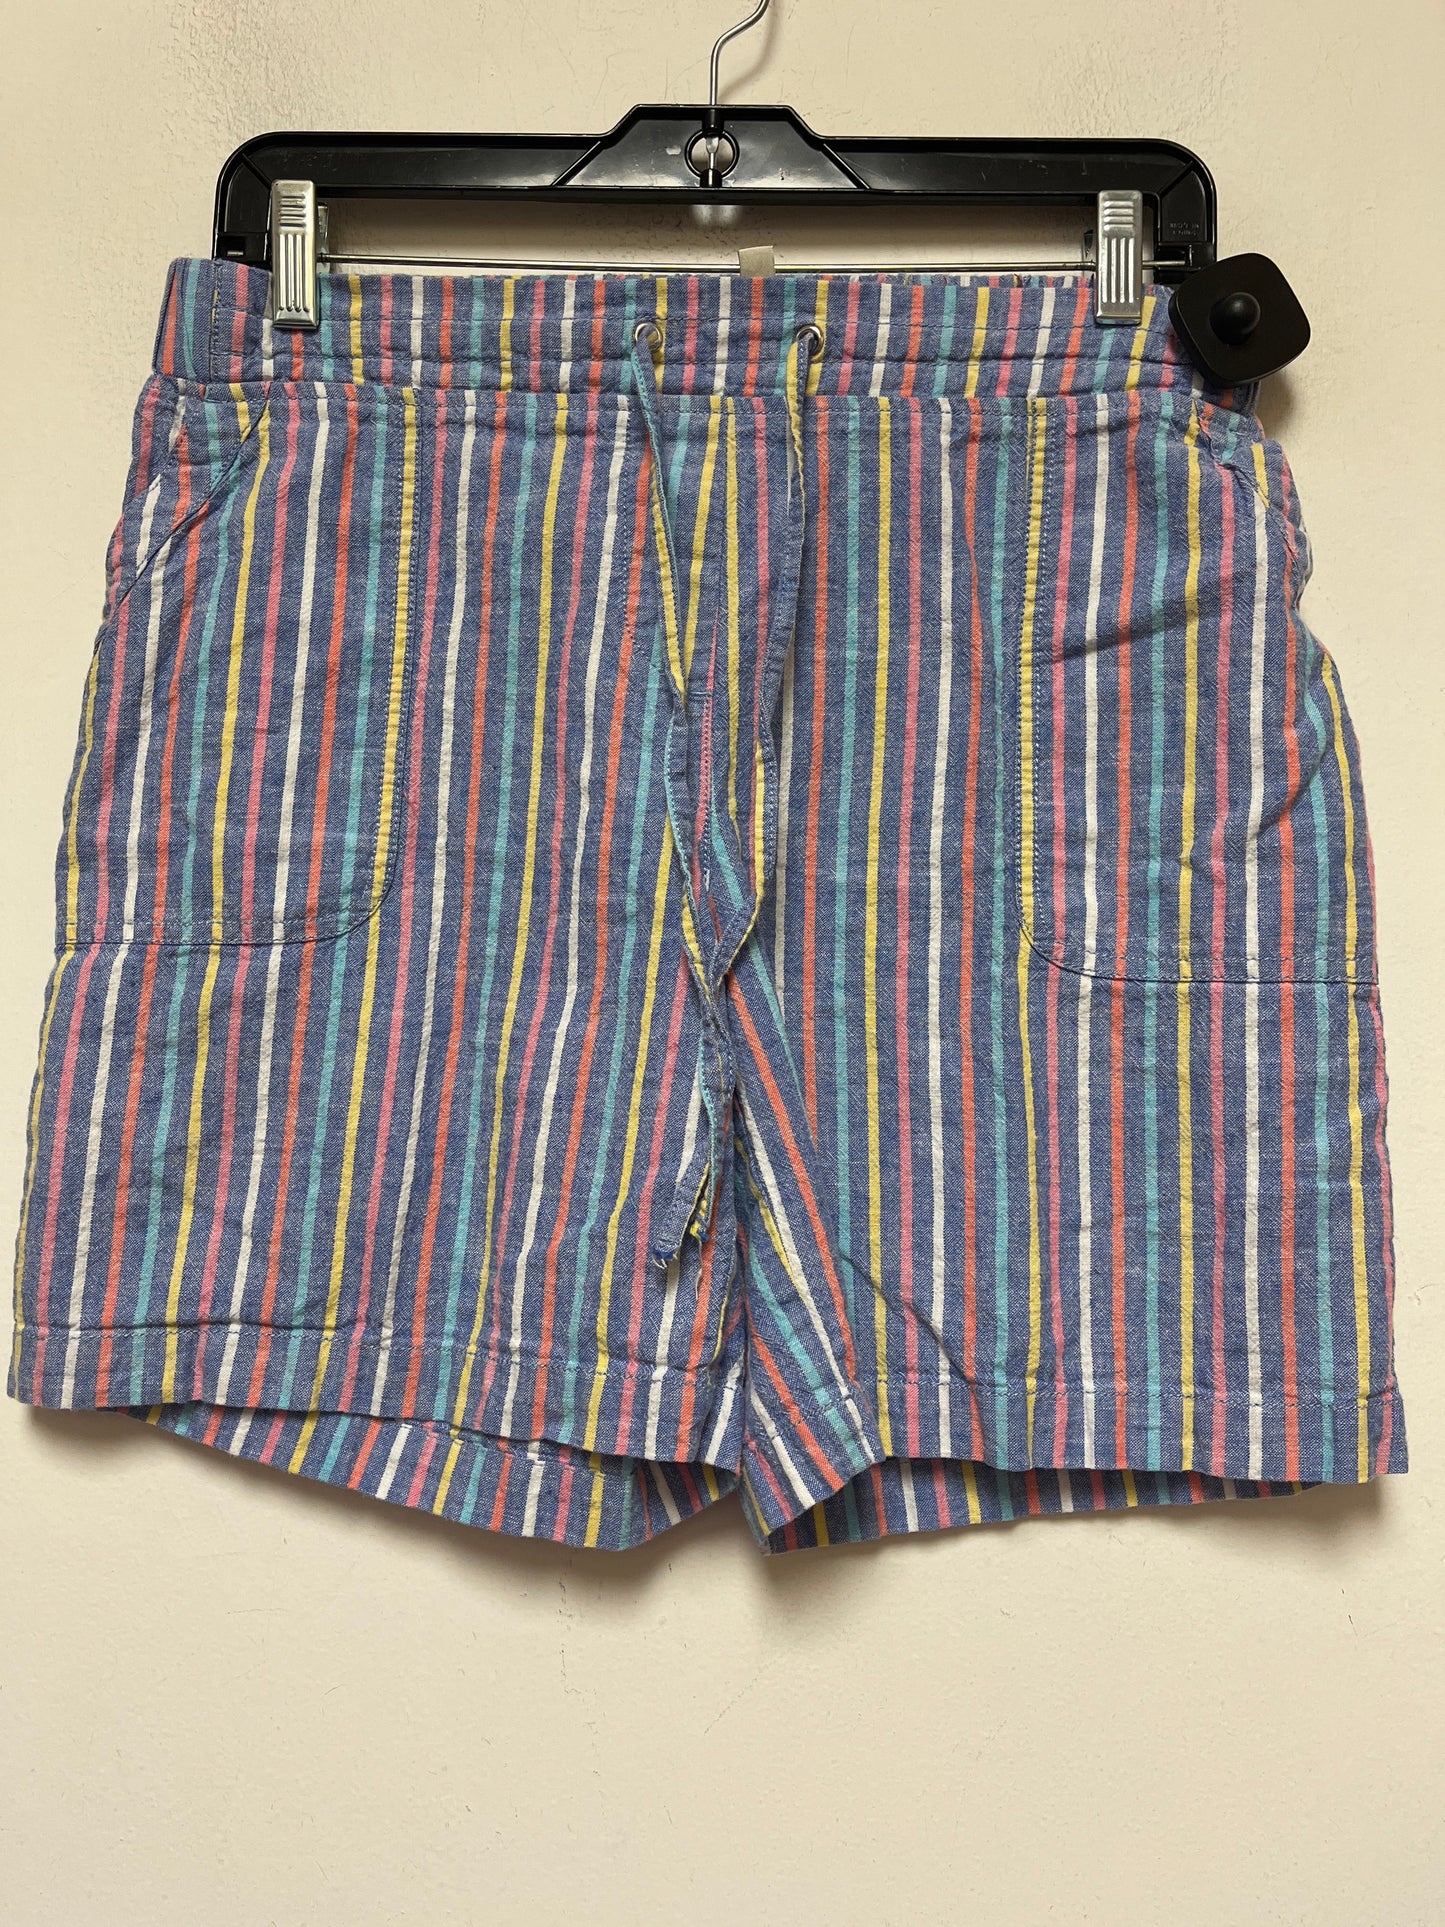 Striped Pattern Shorts Talbots, Size 8